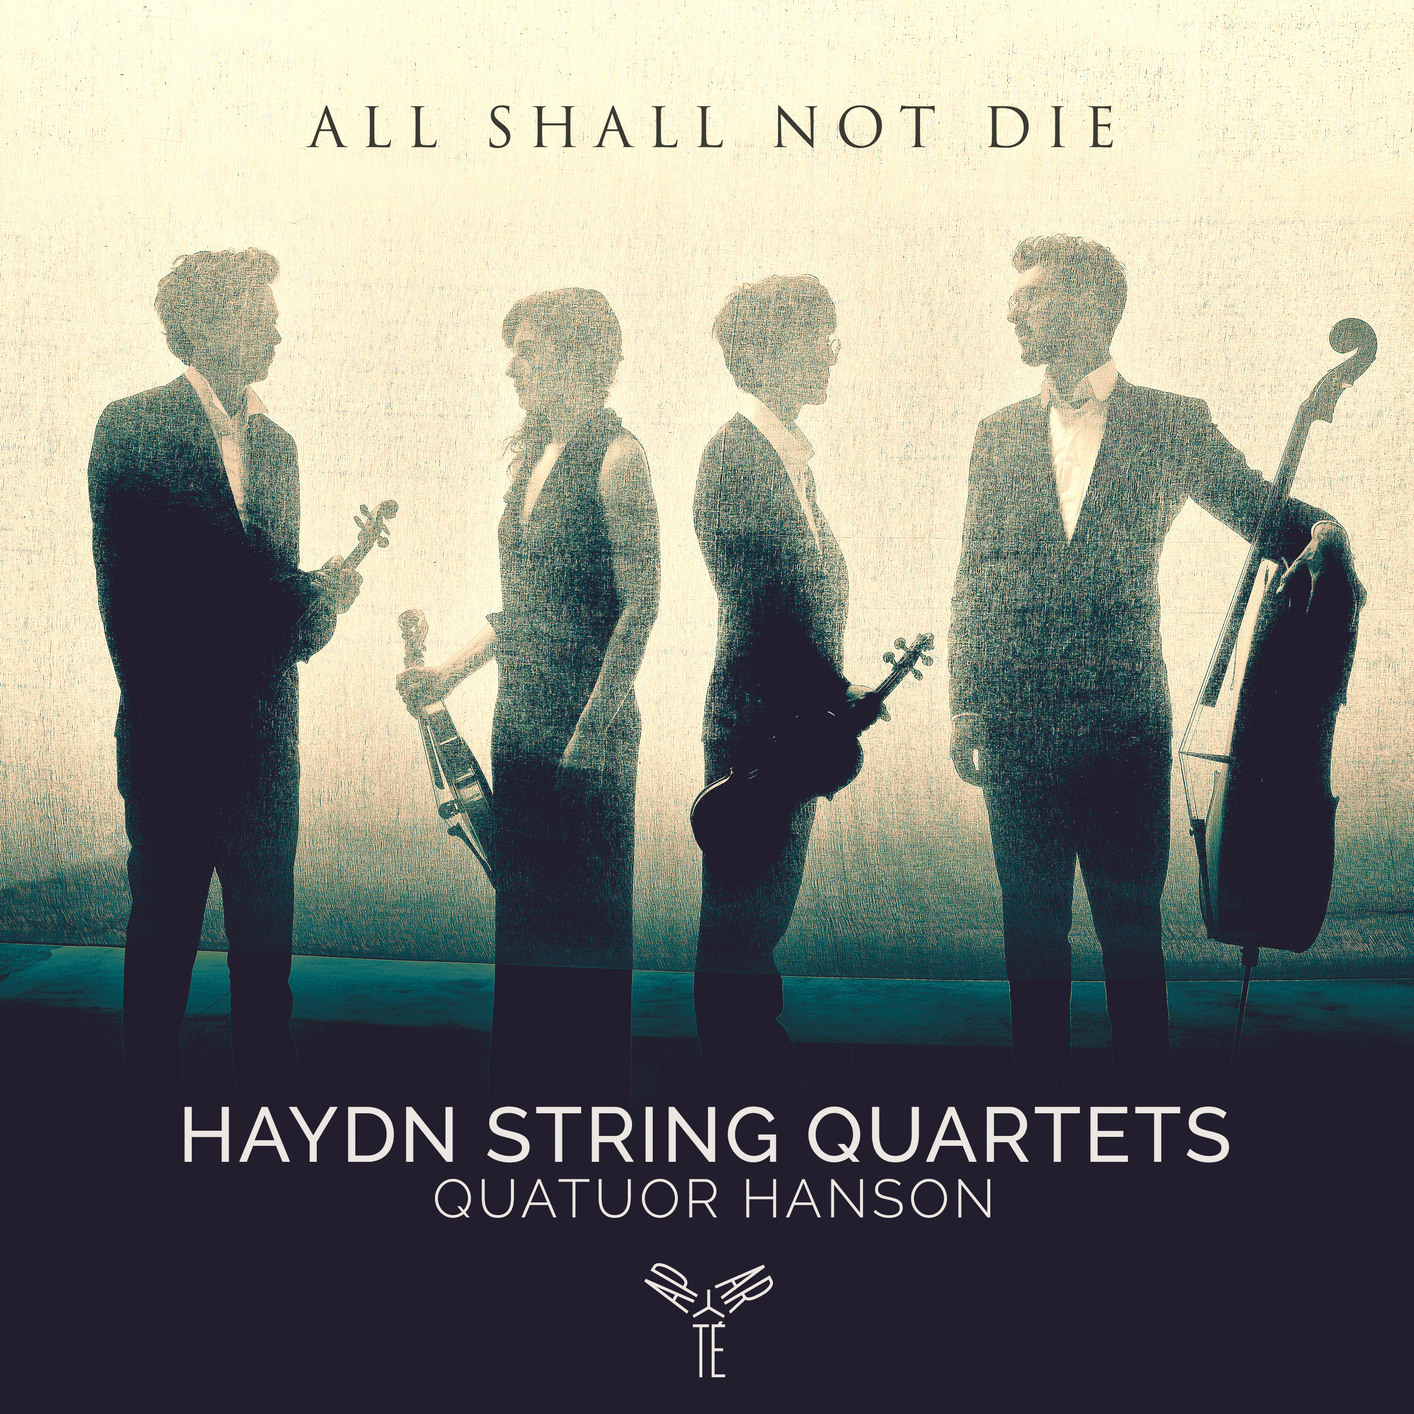 Quatuor Hanson – Haydn: String Quartets “All shall not die” (2019) [FLAC 24bit/96kHz]